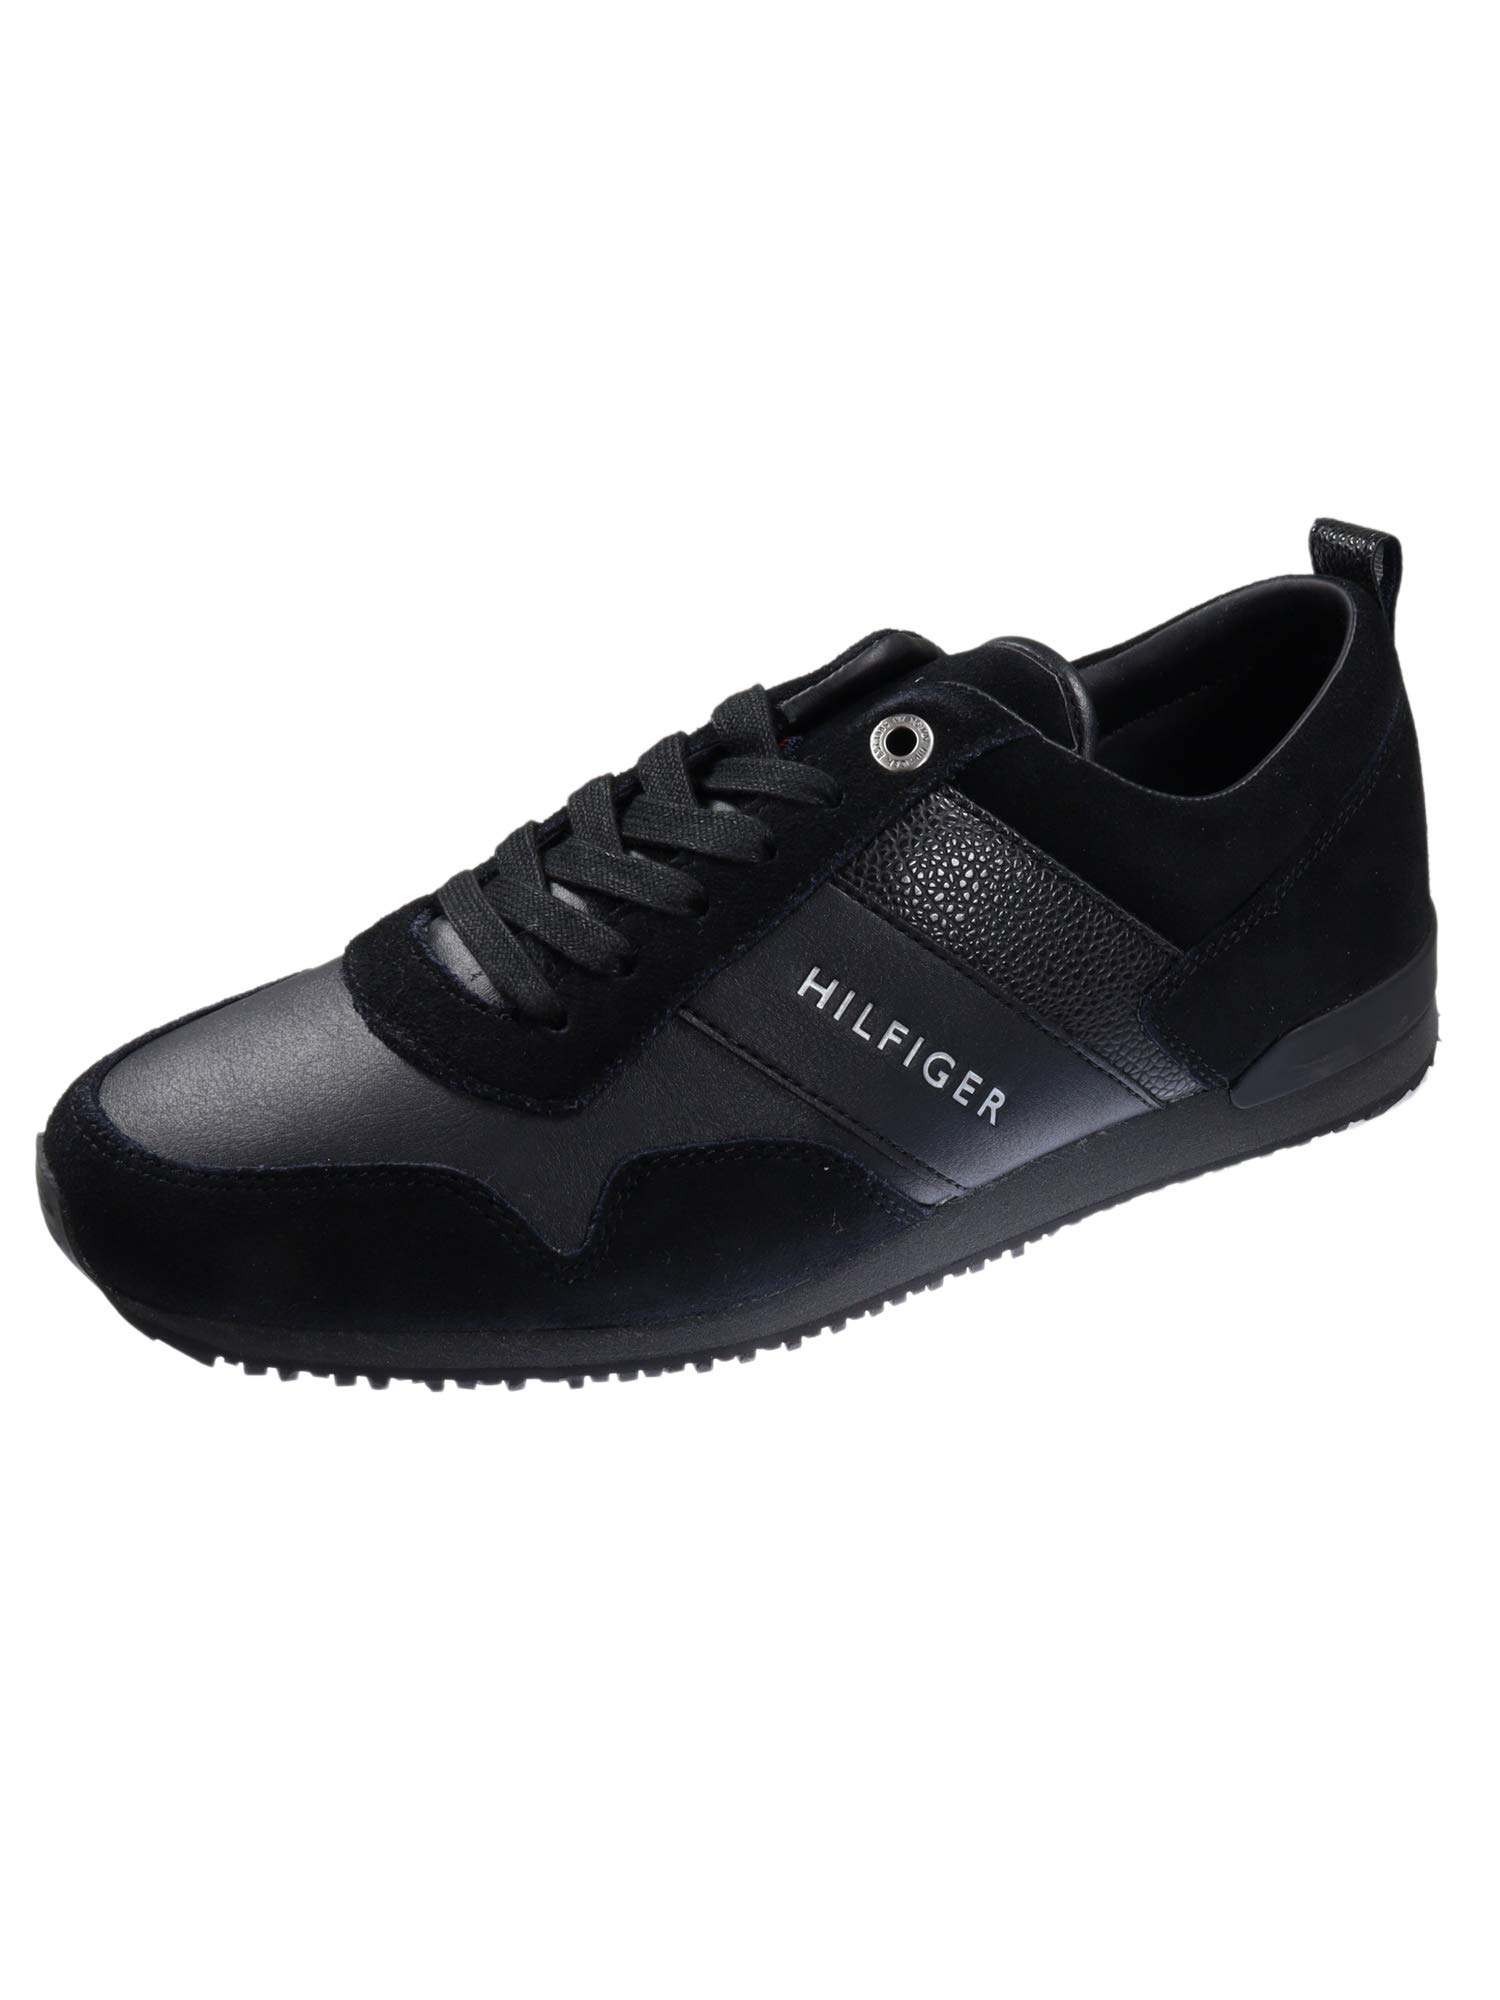 Tommy Hilfiger Herren Sneakers Iconic Leather Suede Mix Runner, Schwarz (Black), 44